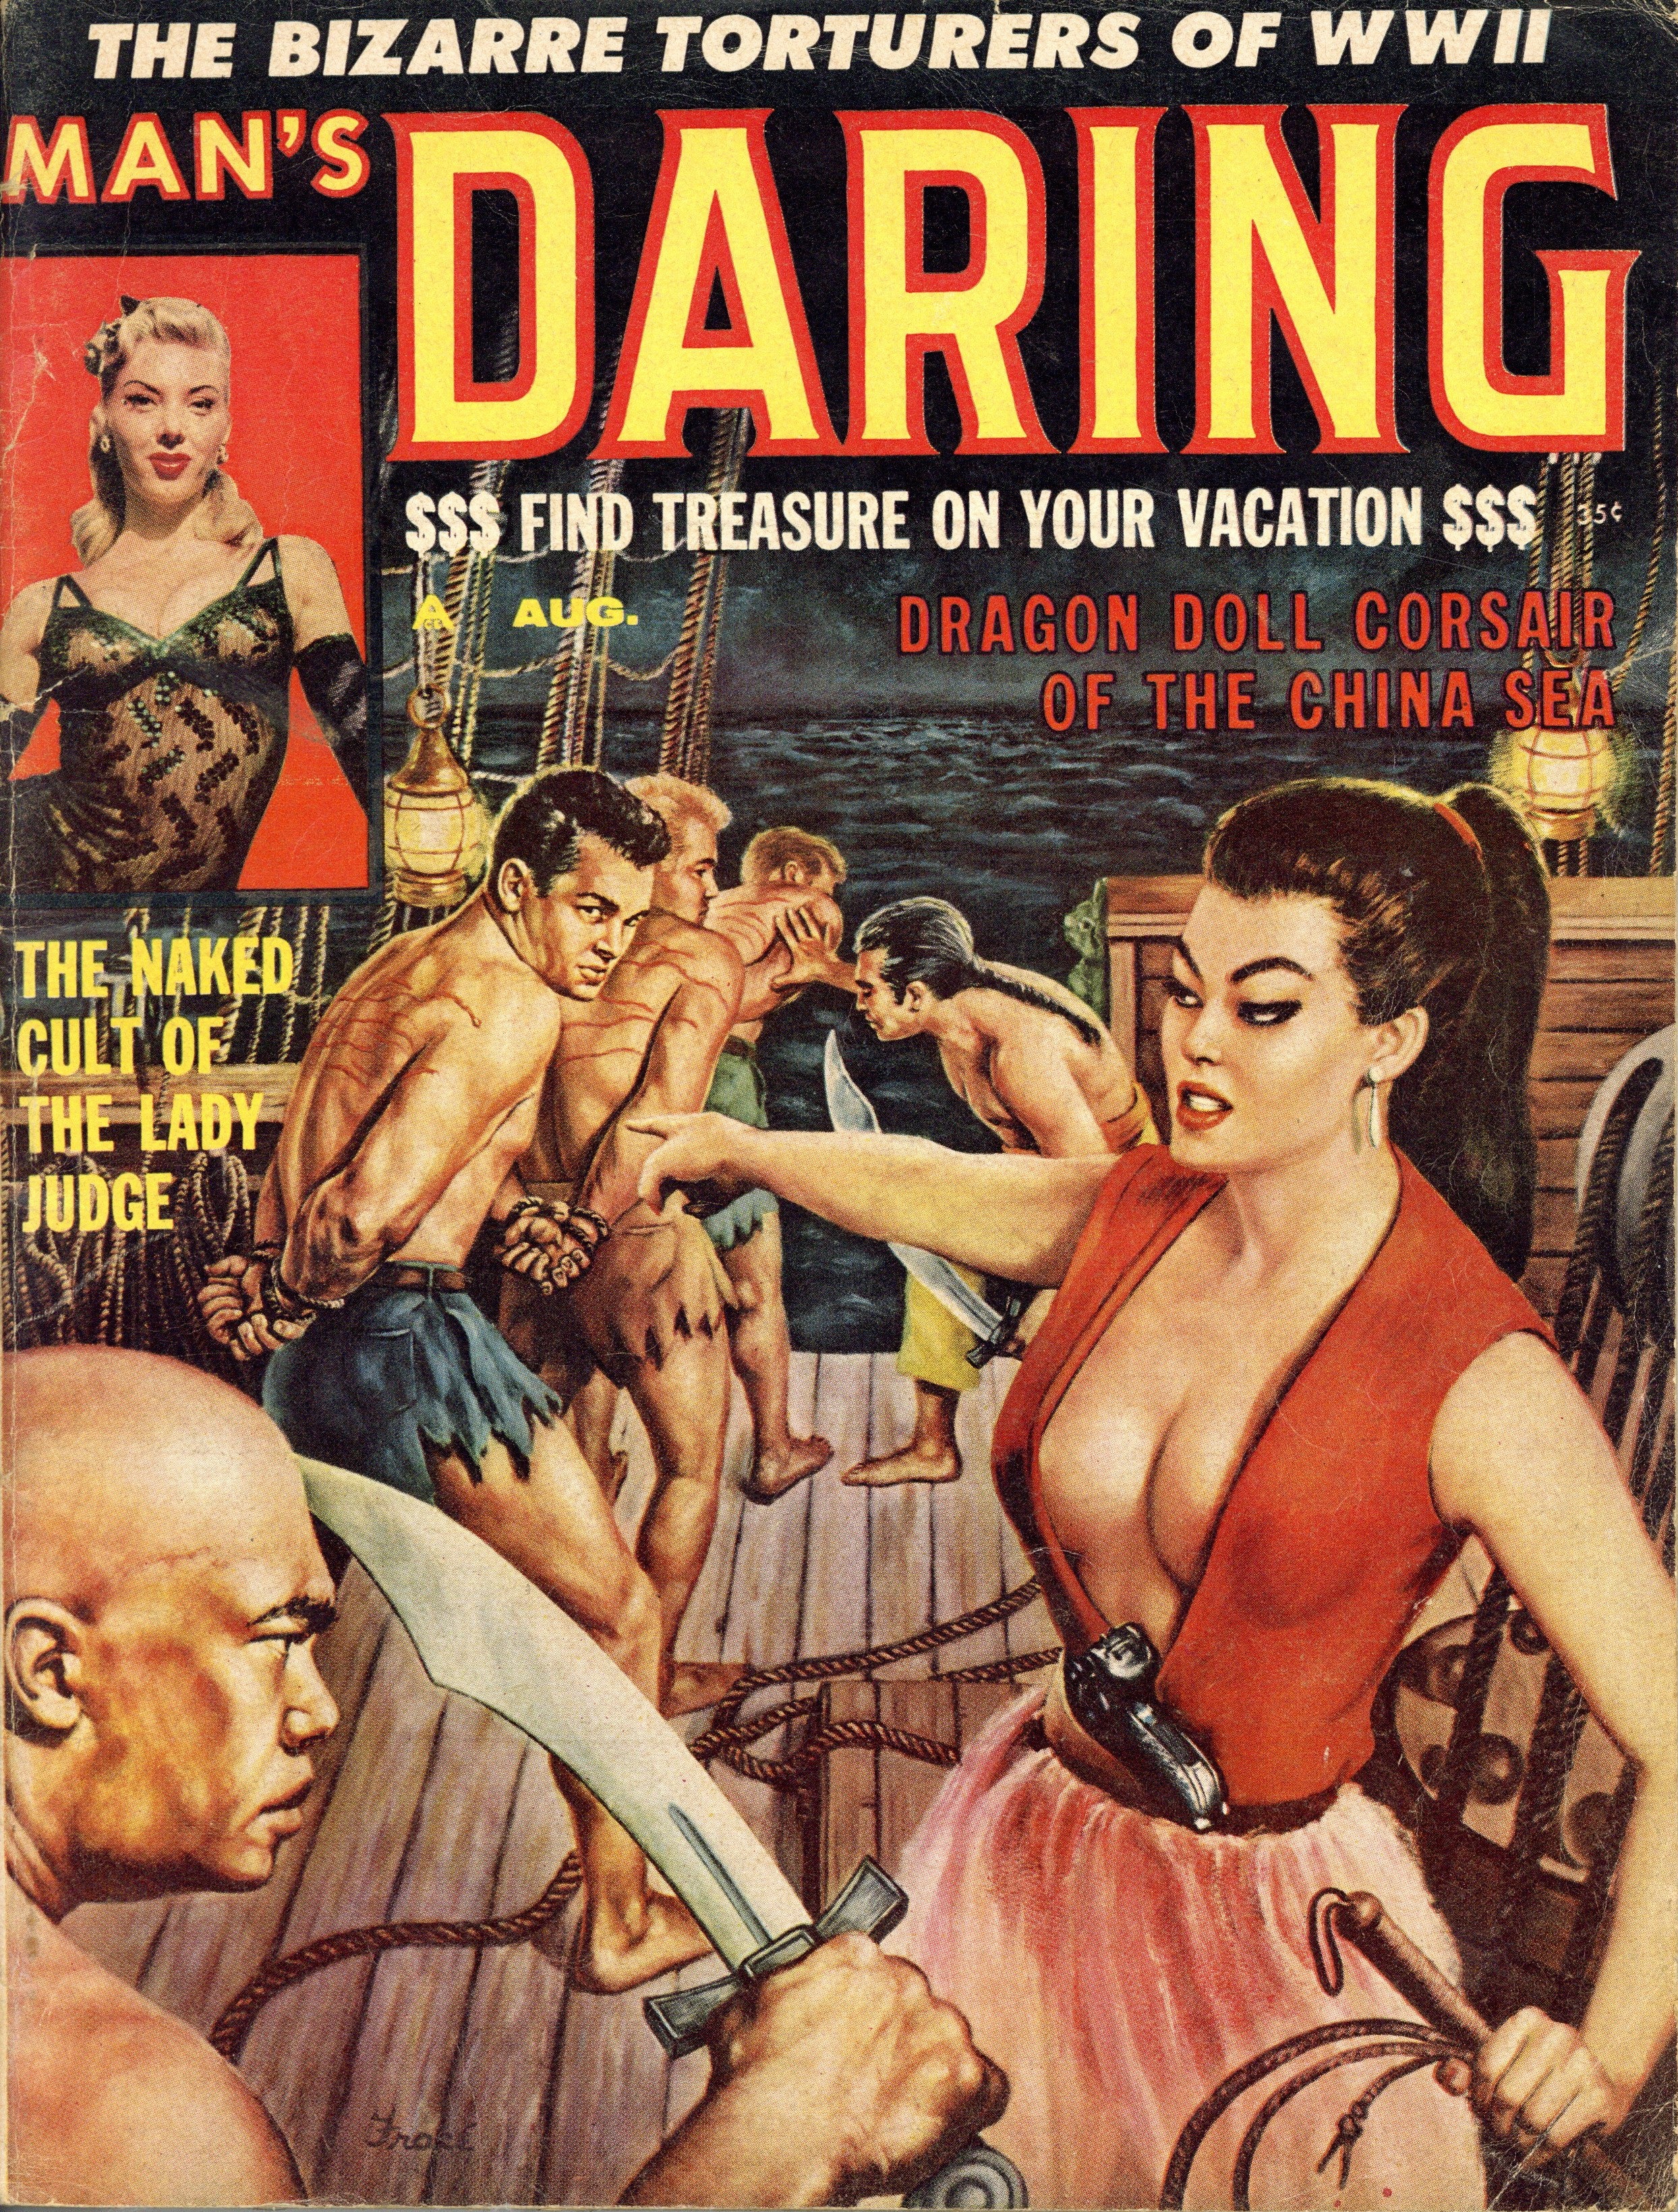 Man's Daring. August 1960